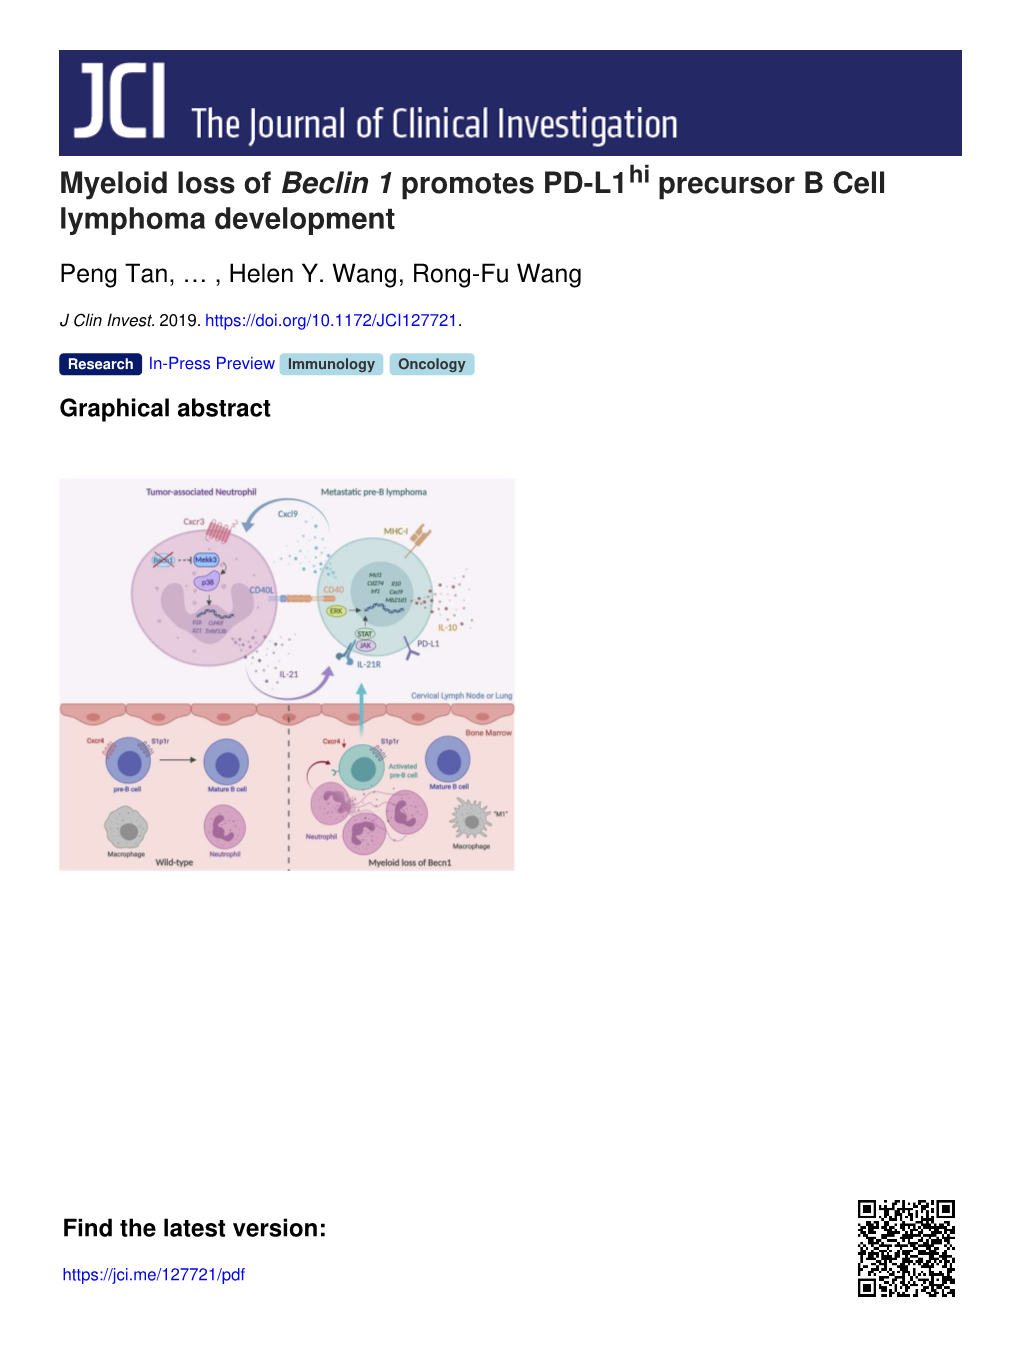 Myeloid Loss of Beclin 1 Promotes PD-L1 Precursor B Cell Lymphoma